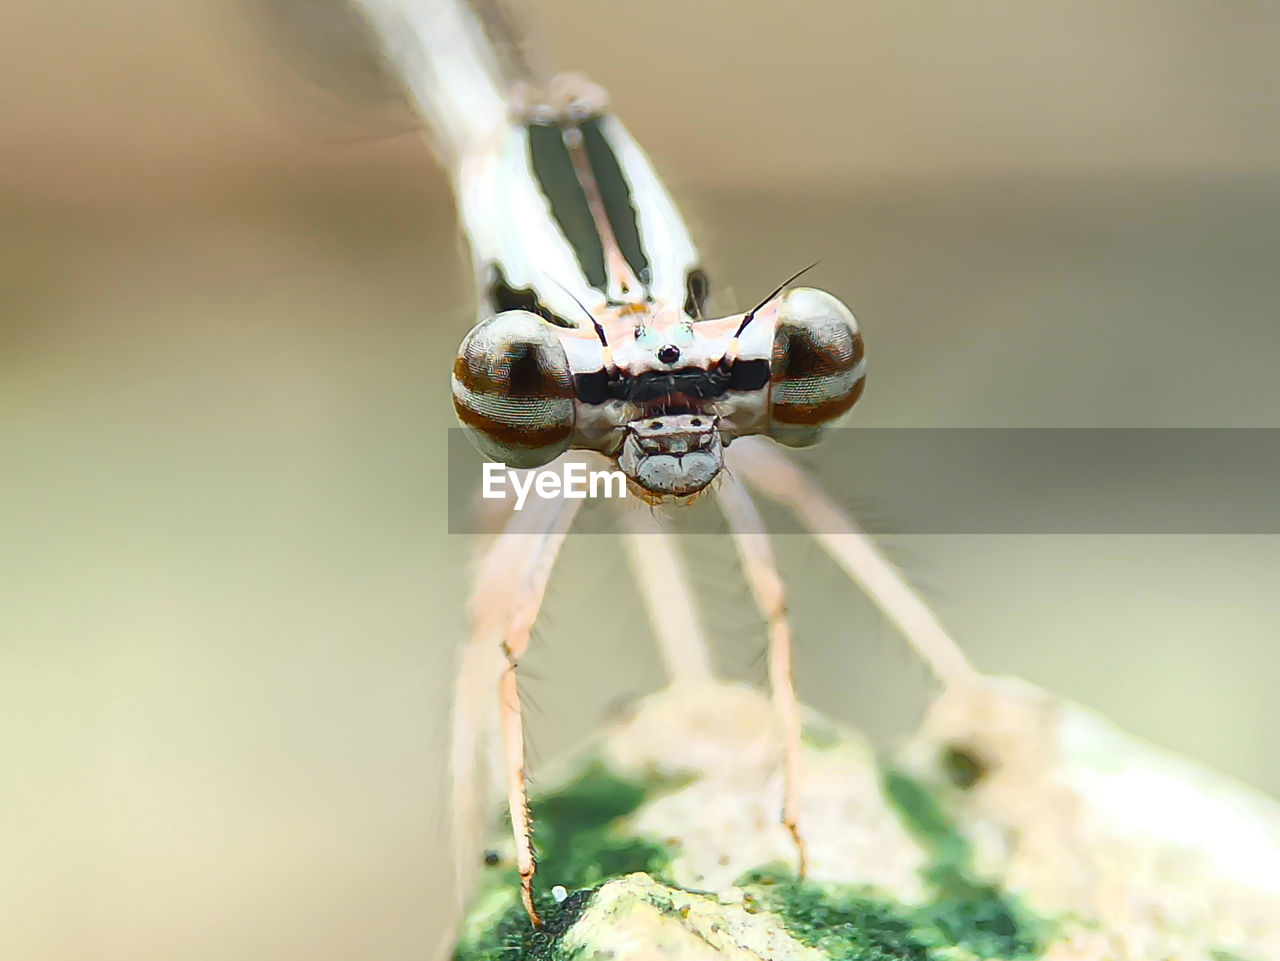 Dragonfly eye needle